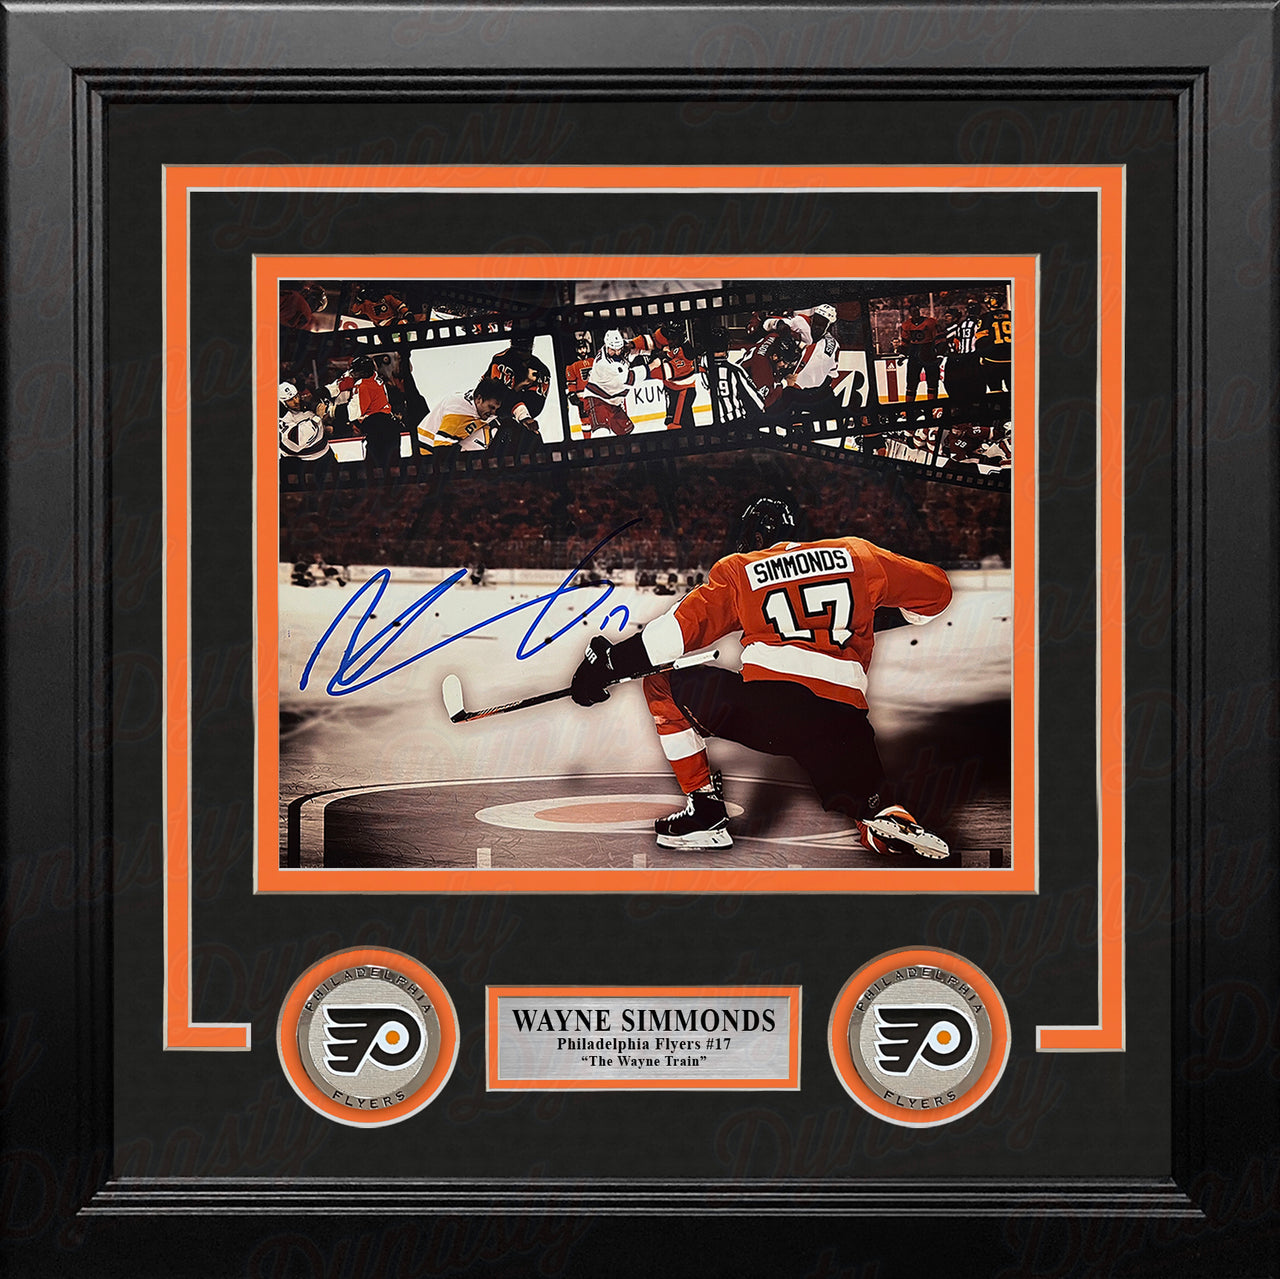 Wayne Simmonds Philadelphia Flyers Autographed 8" x 10" Framed Collage Hockey Photo